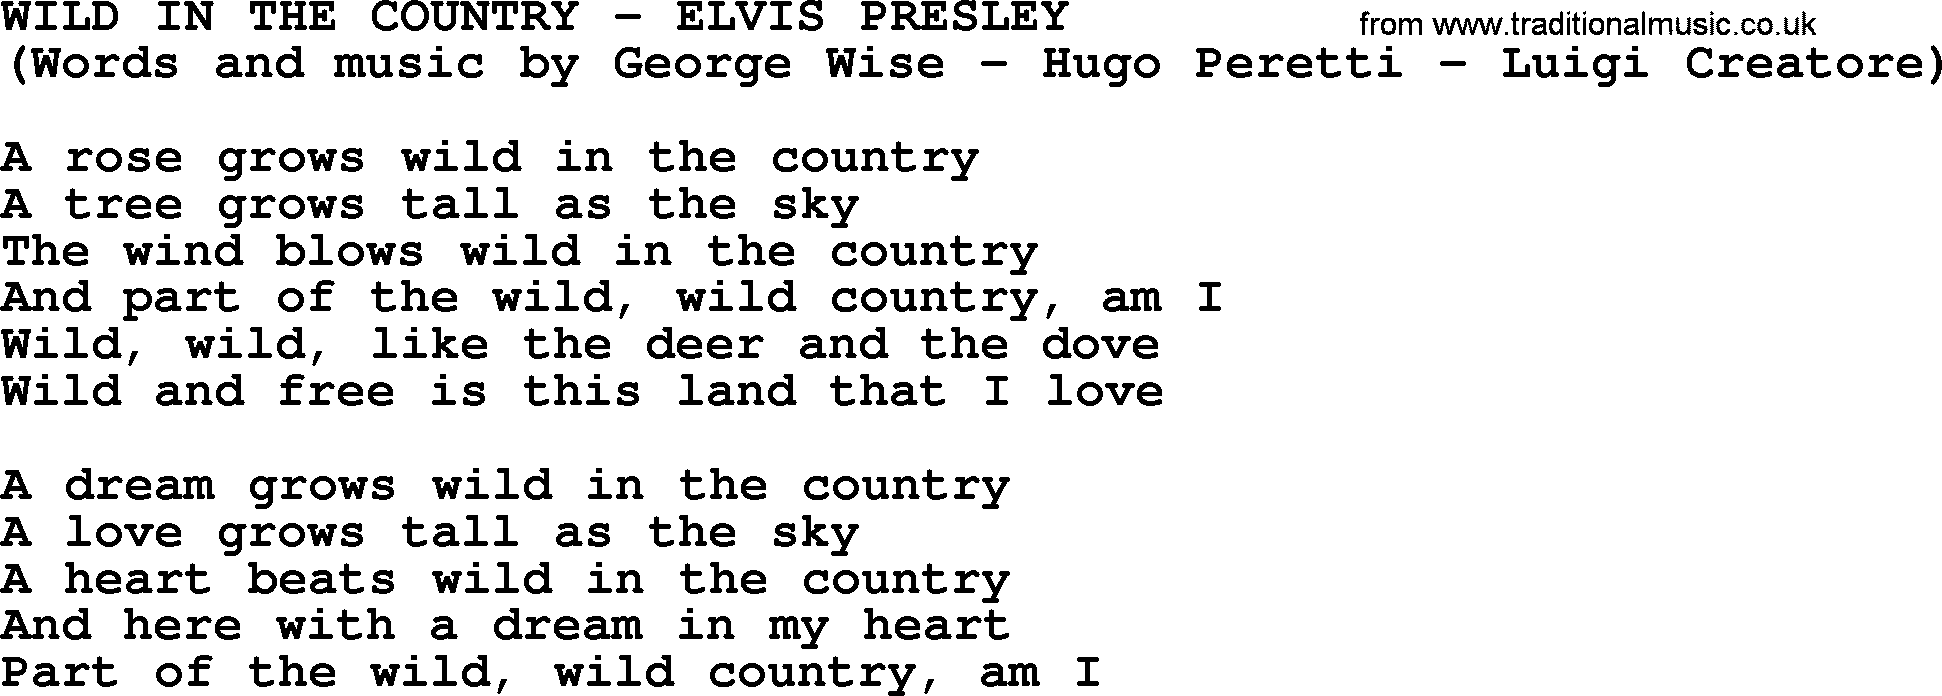 Elvis Presley song: Wild In The Country lyrics